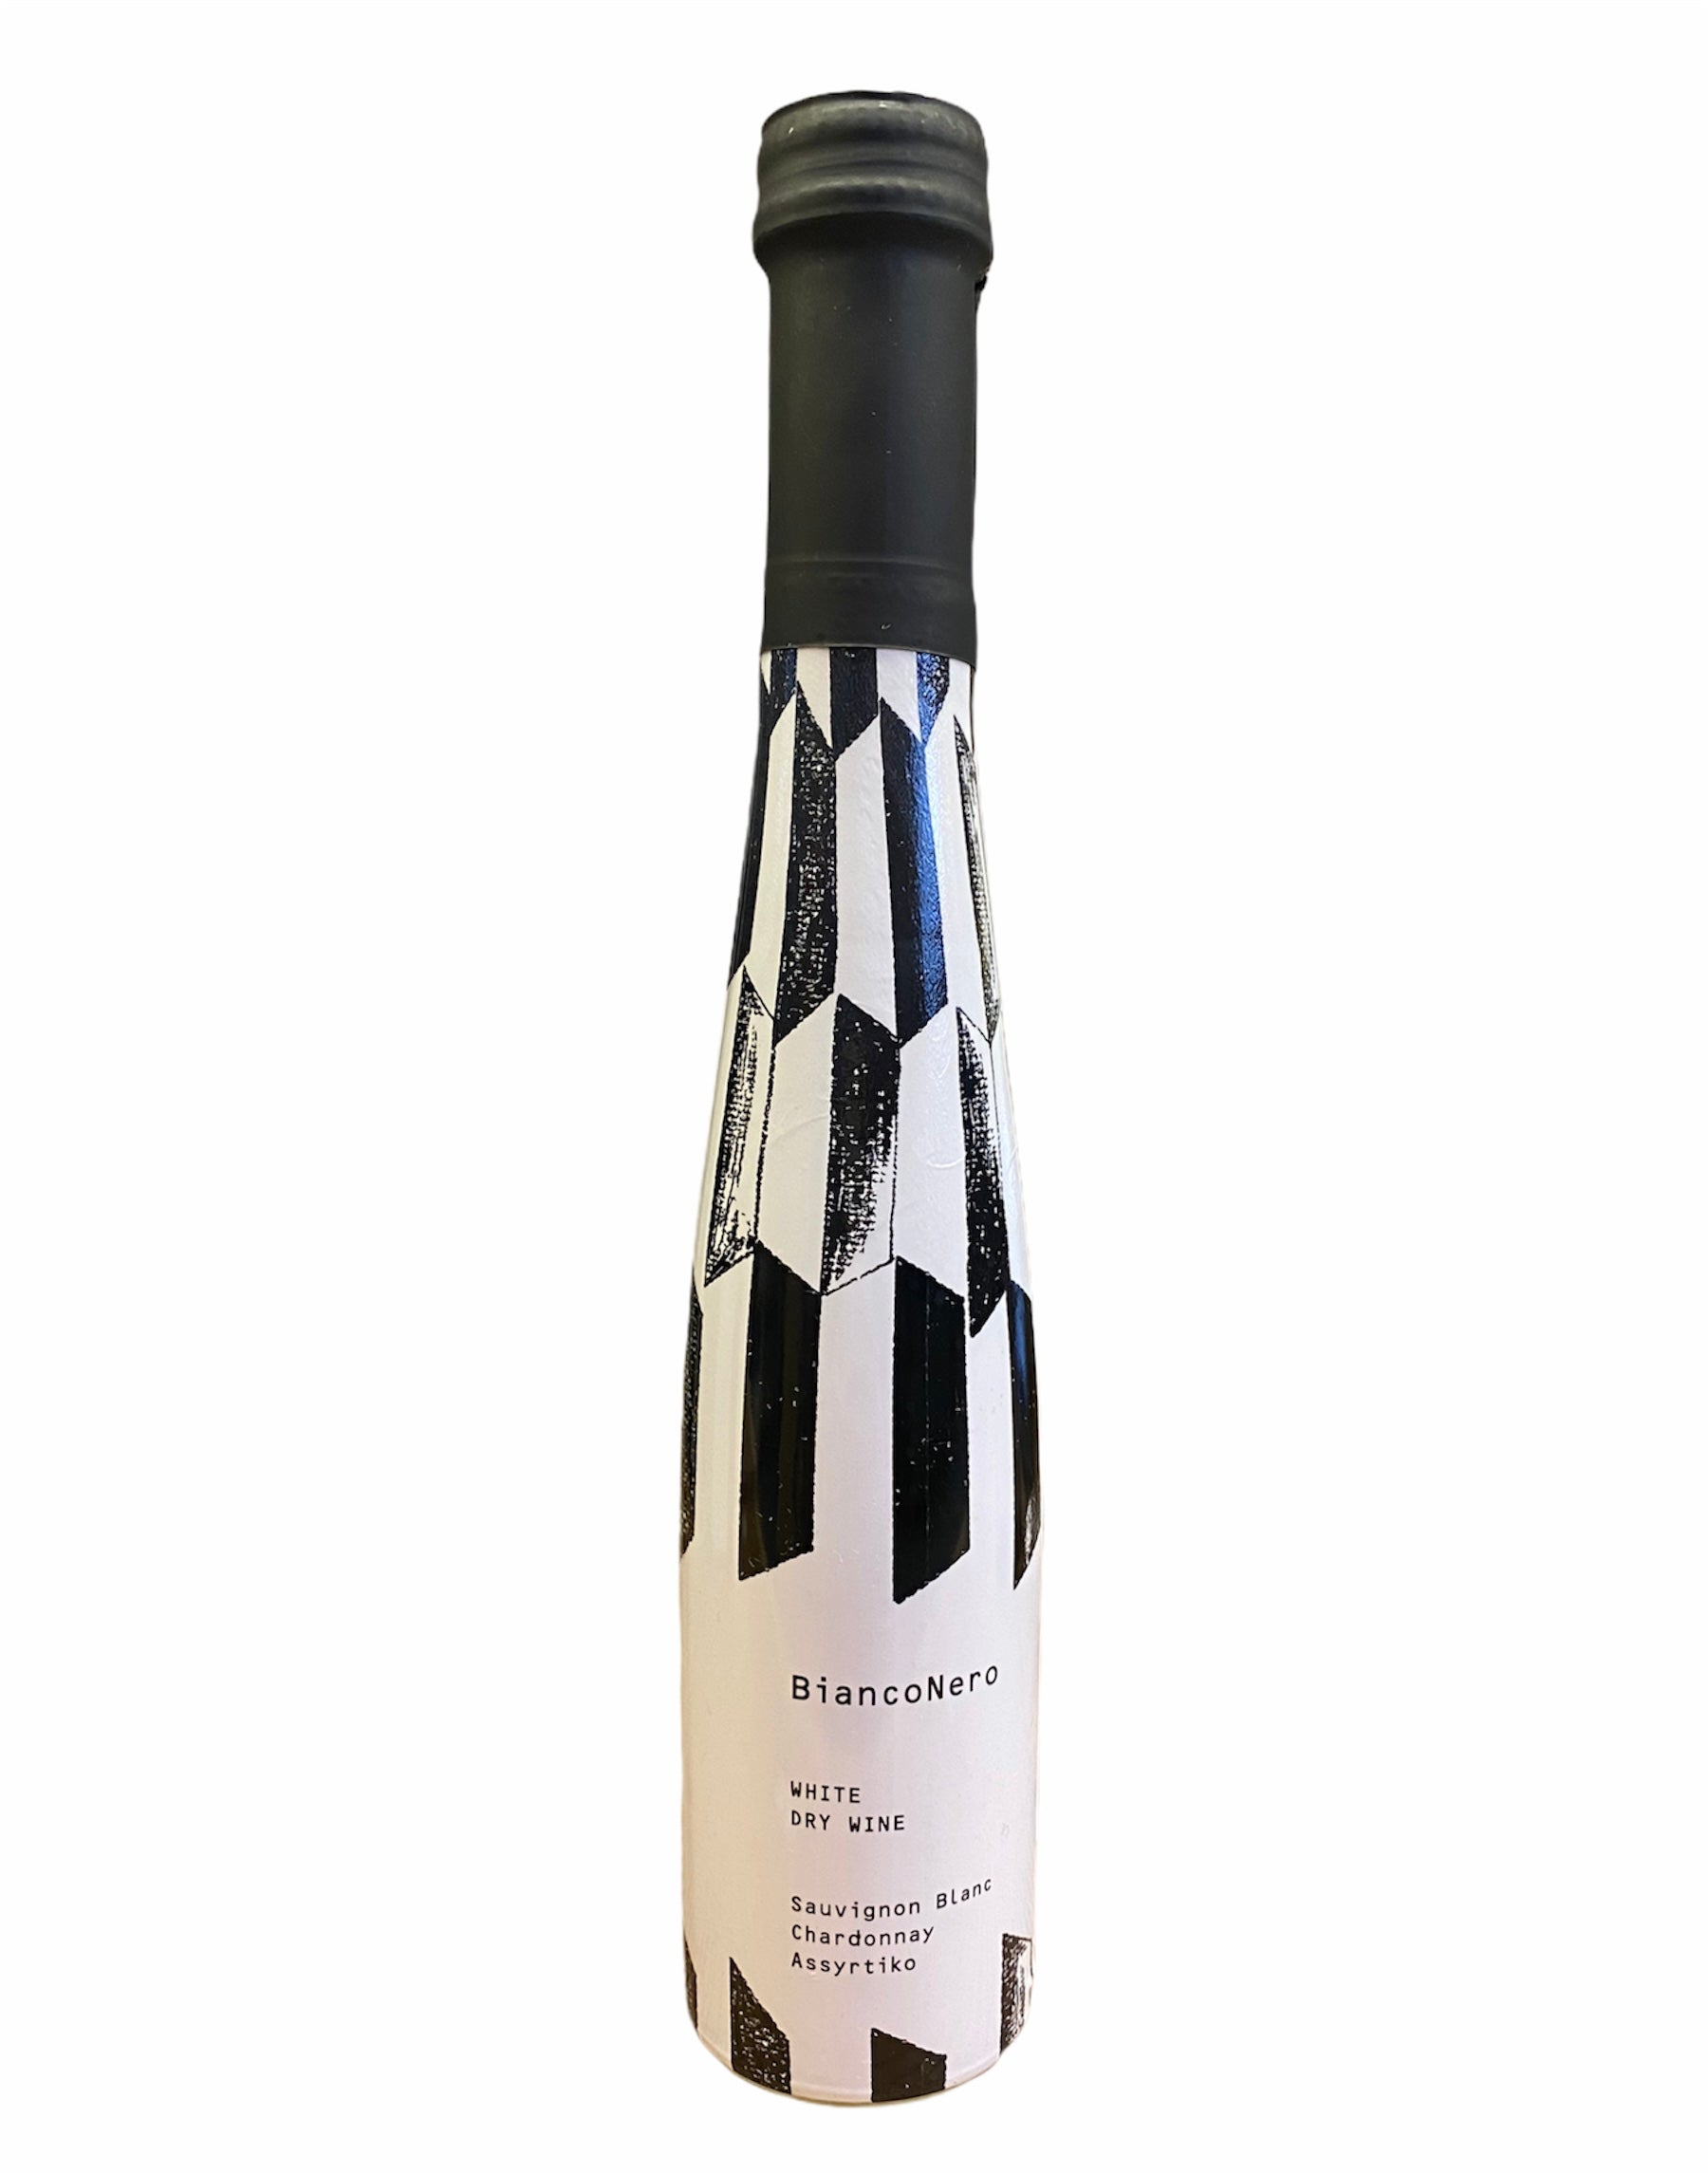 Tsililis Bianco Nero Weiß Wein Pantera Delifood – Dry 12%Vol trocken 187,5ml White Wine